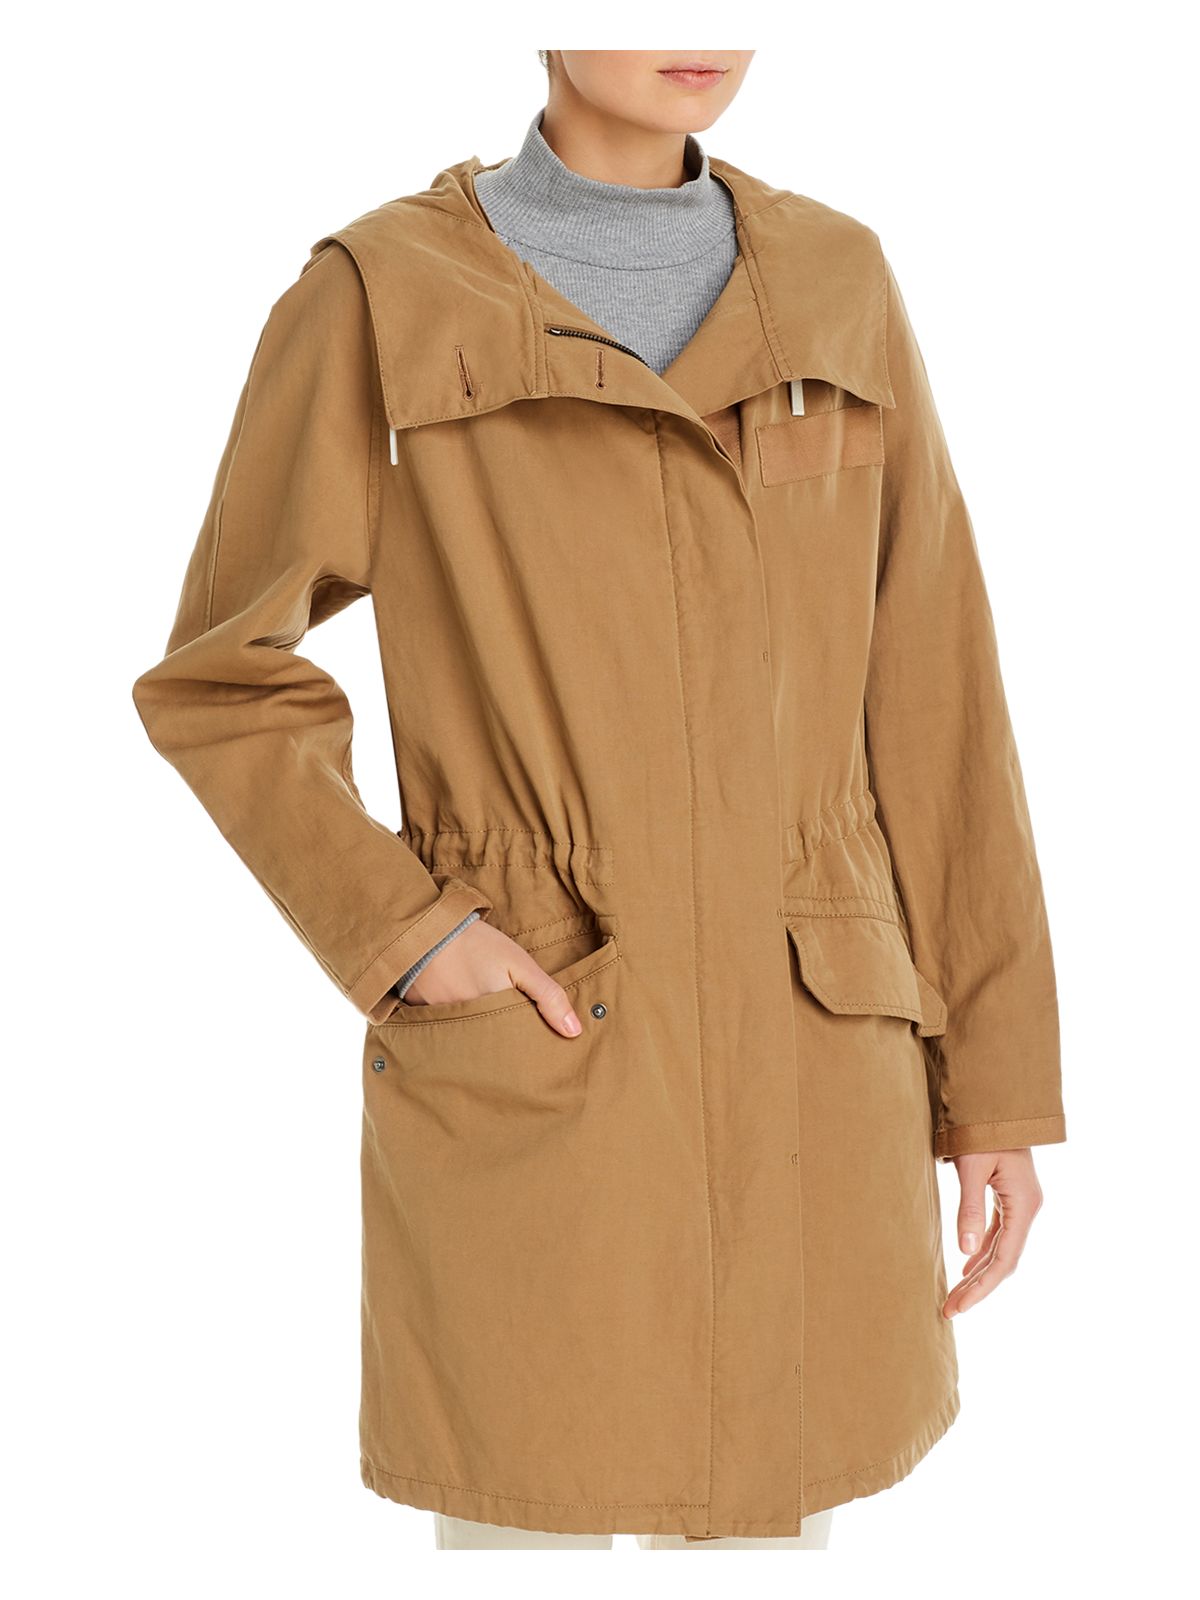 YS ARMY Womens Beige Zip Up Winter Jacket Coat 40